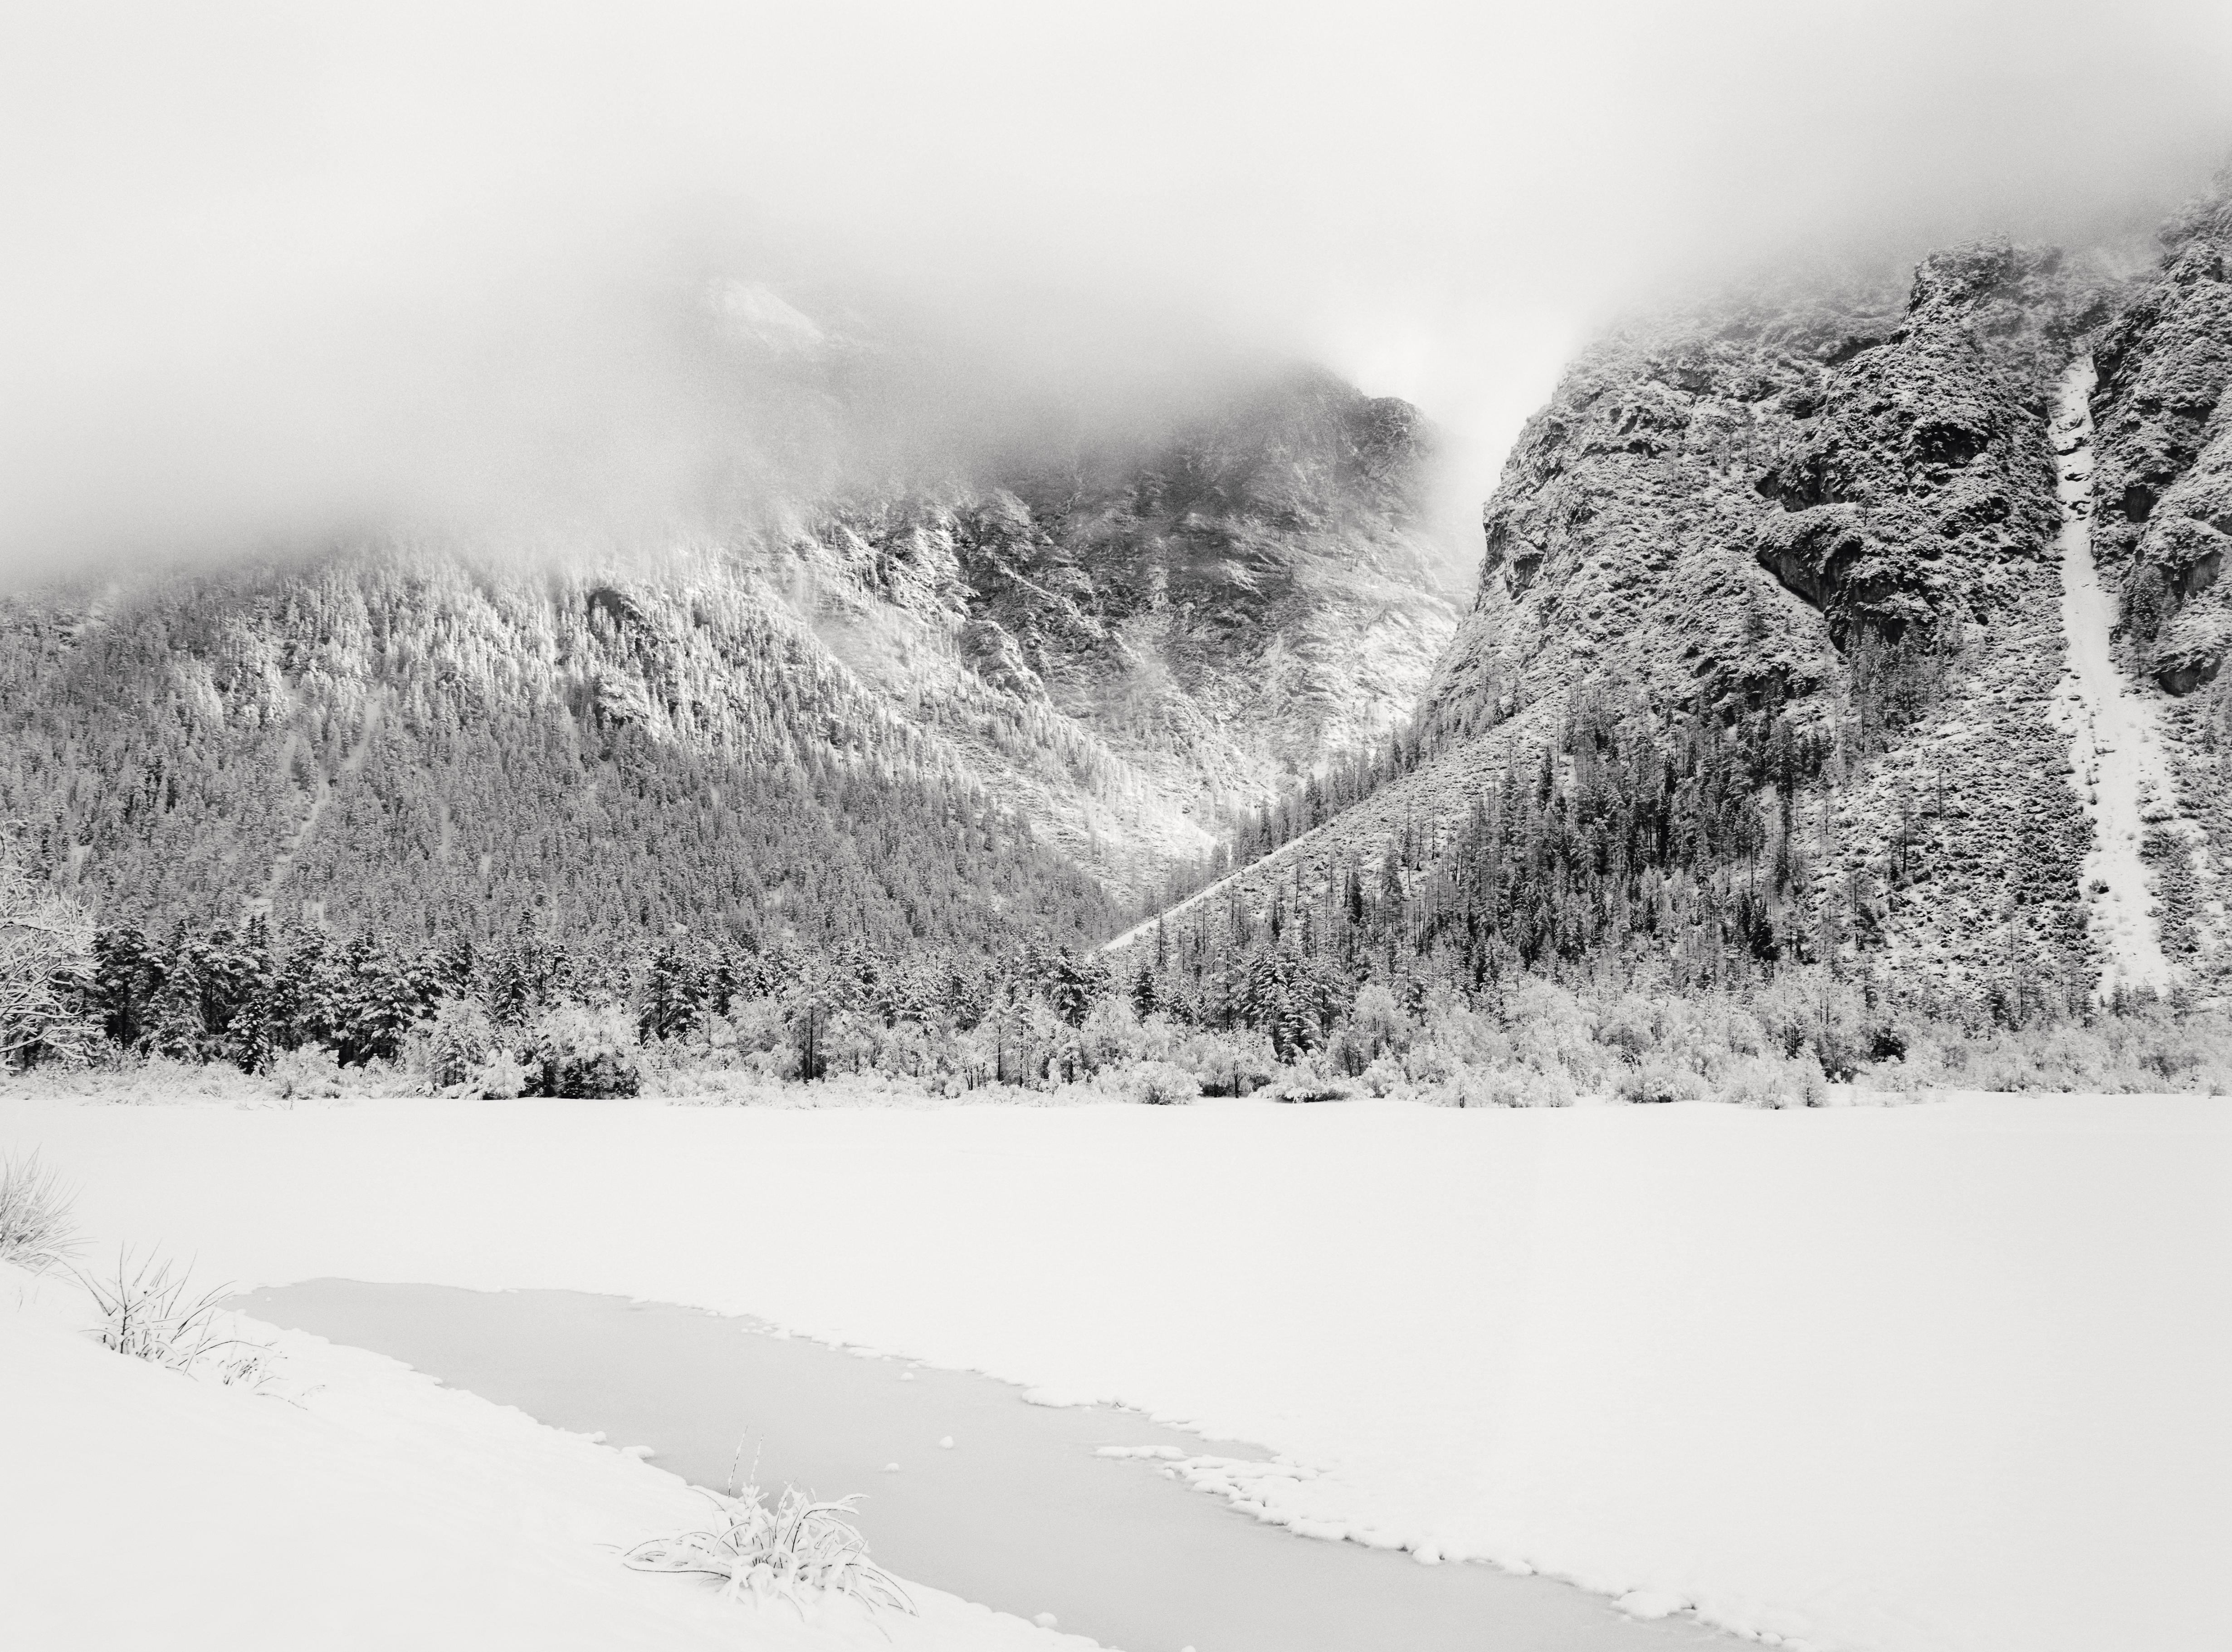 Ugne Pouwell Black and White Photograph - Cortina D'Ampezzo No.2, Analogue Black and White Landscape Photography, Ltd. 20